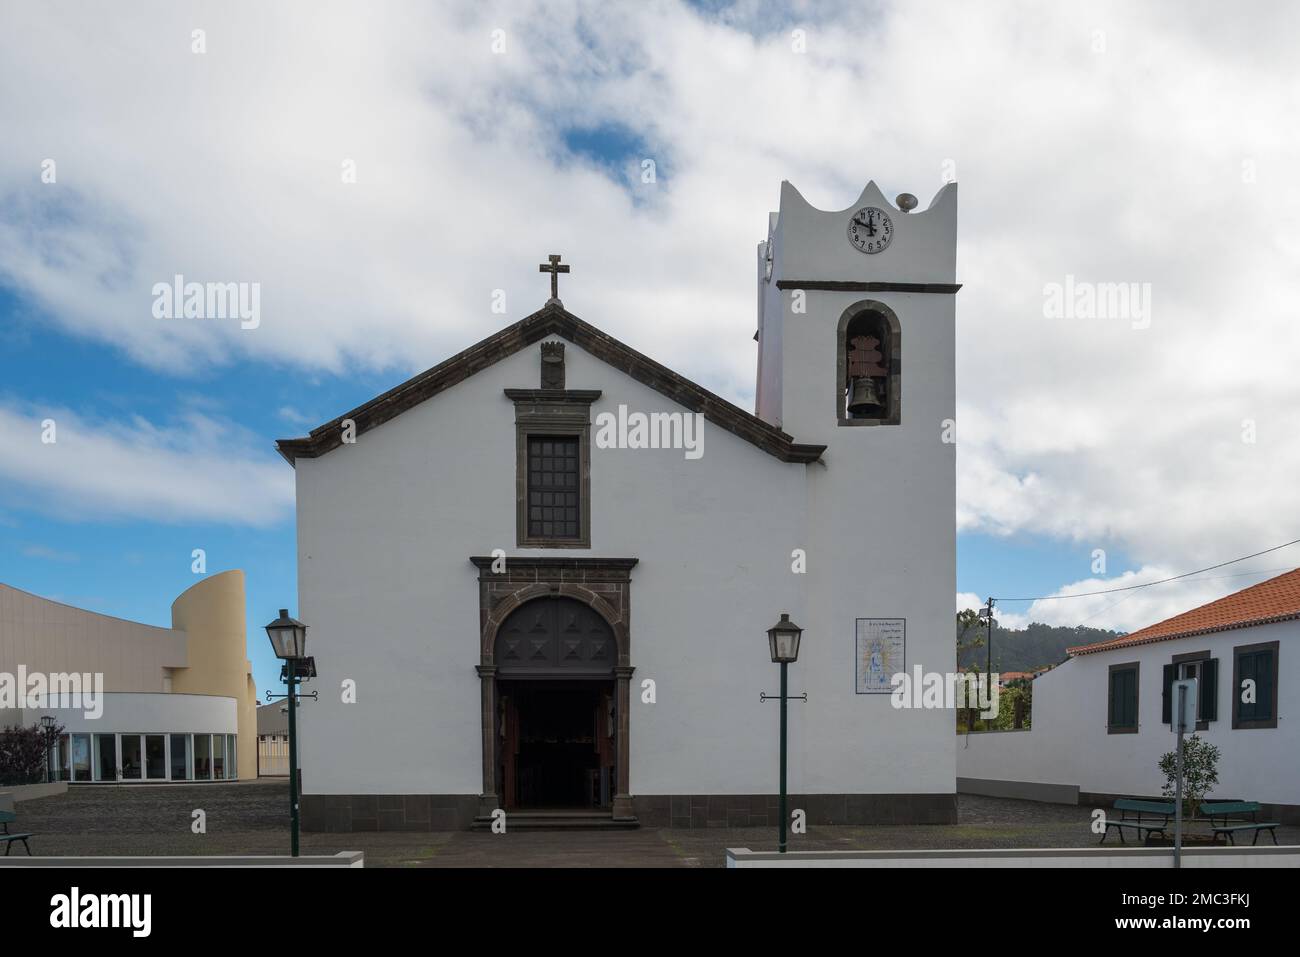 Facade of Santana (Santa Ana) church from 18th century in old town of Albufeira. Stock Photo